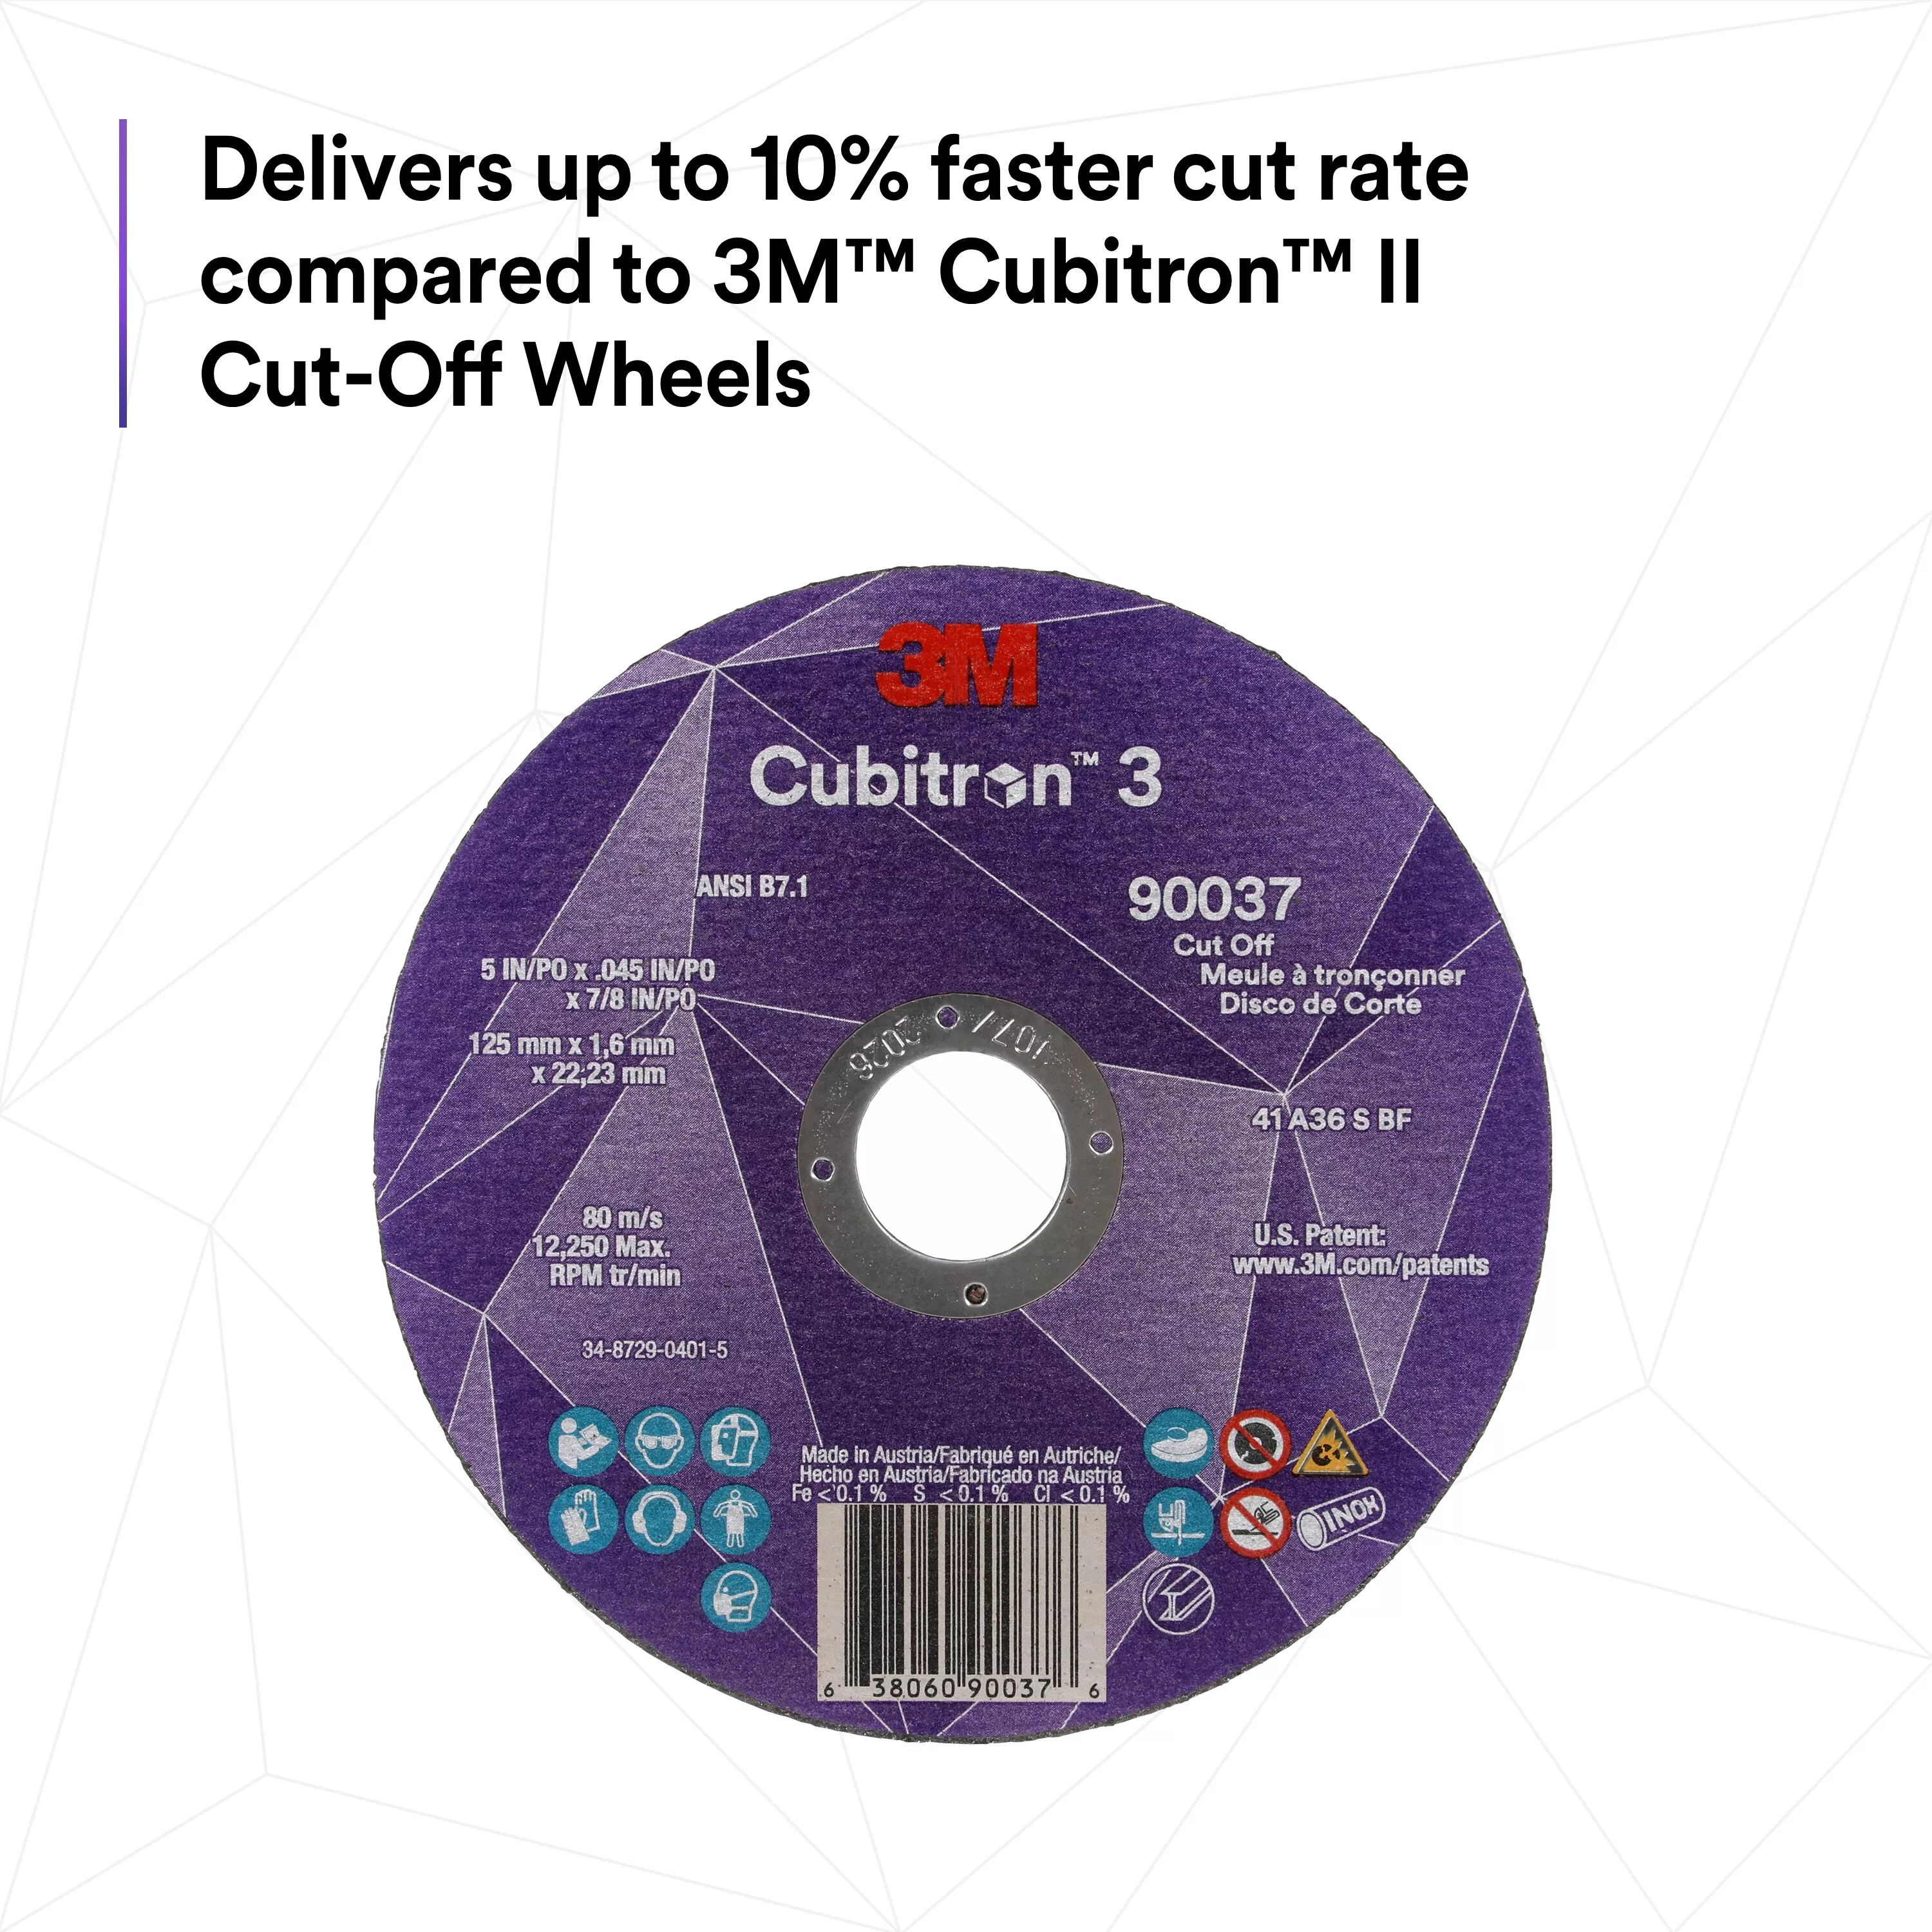 SKU 7100304005 | 3M™ Cubitron™ 3 Cut-Off Wheel